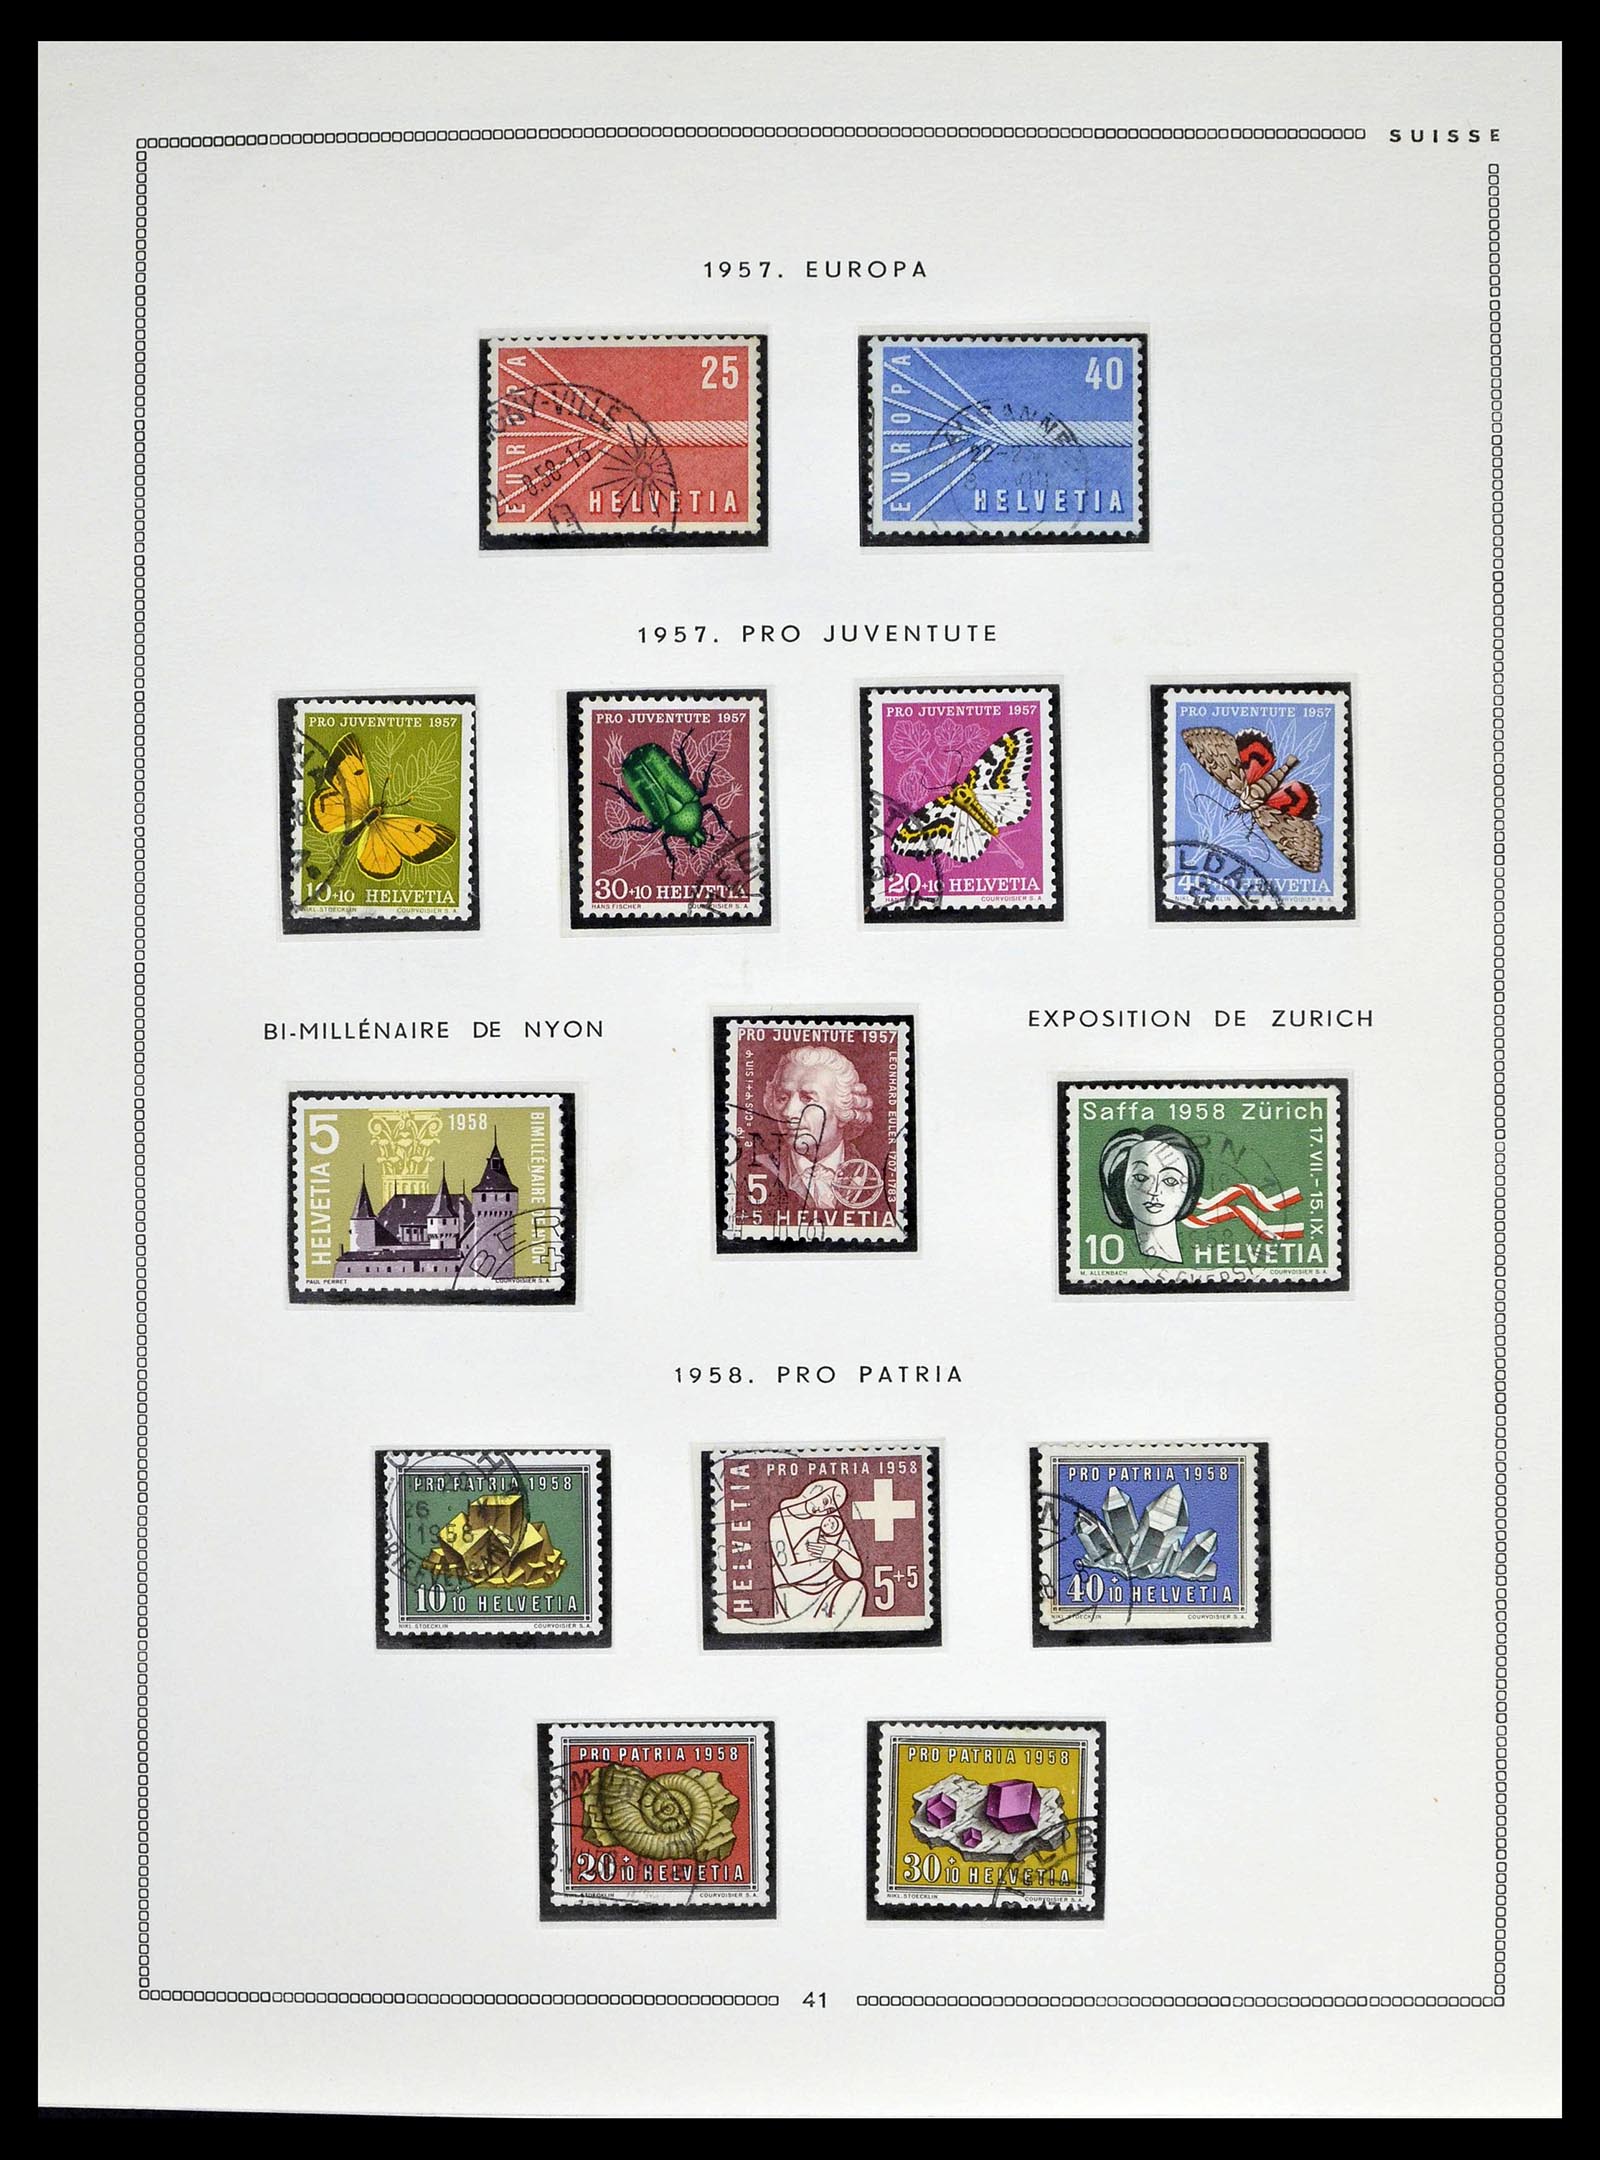 39094 0039 - Stamp collection 39094 Switzerland 1850-2005.